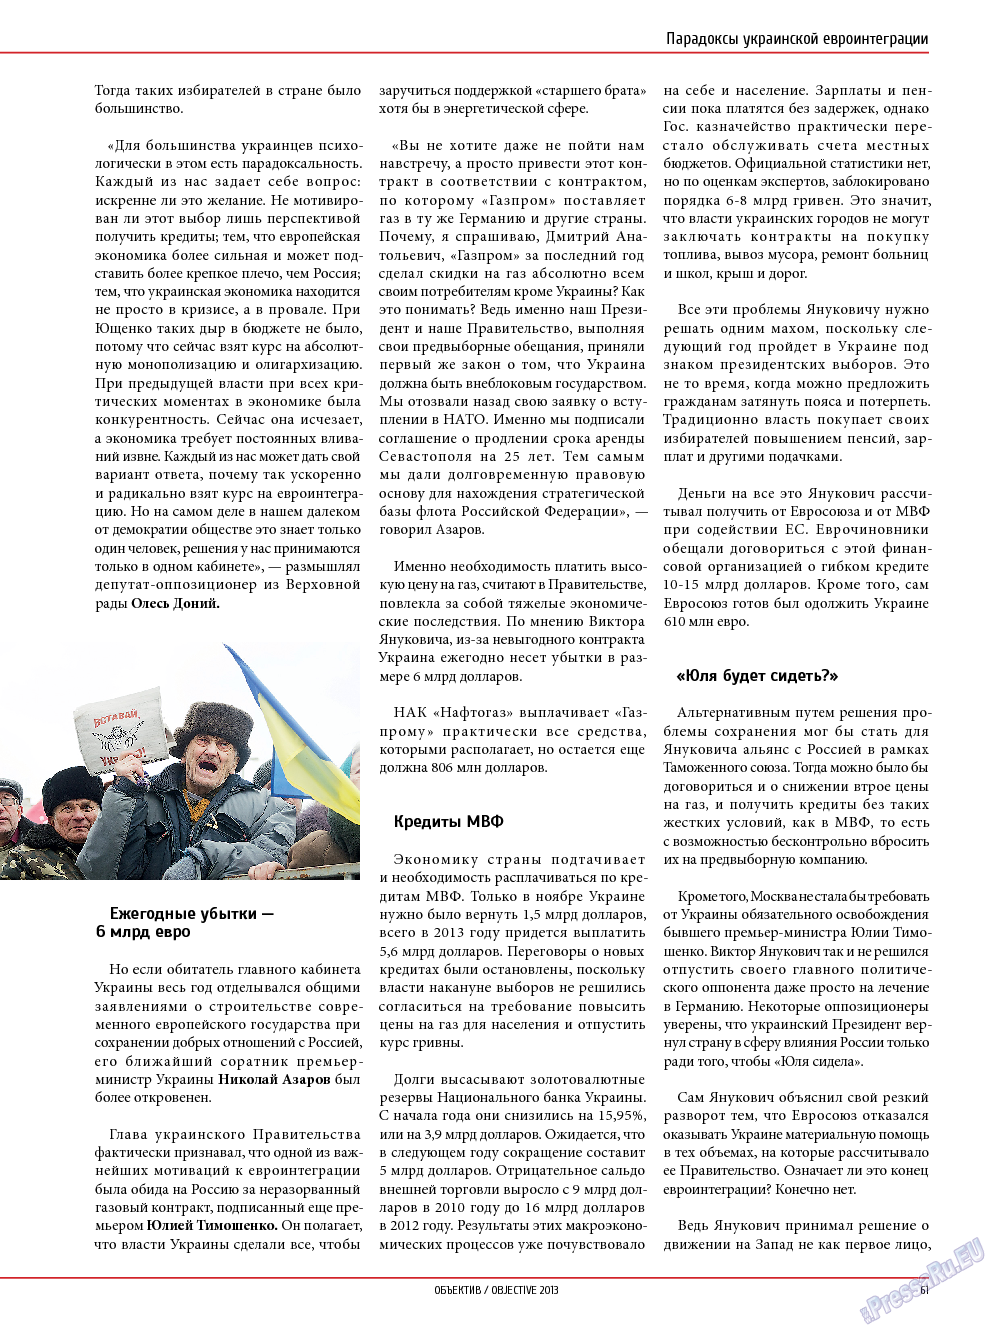 Объектив EU, журнал. 2013 №4 стр.61